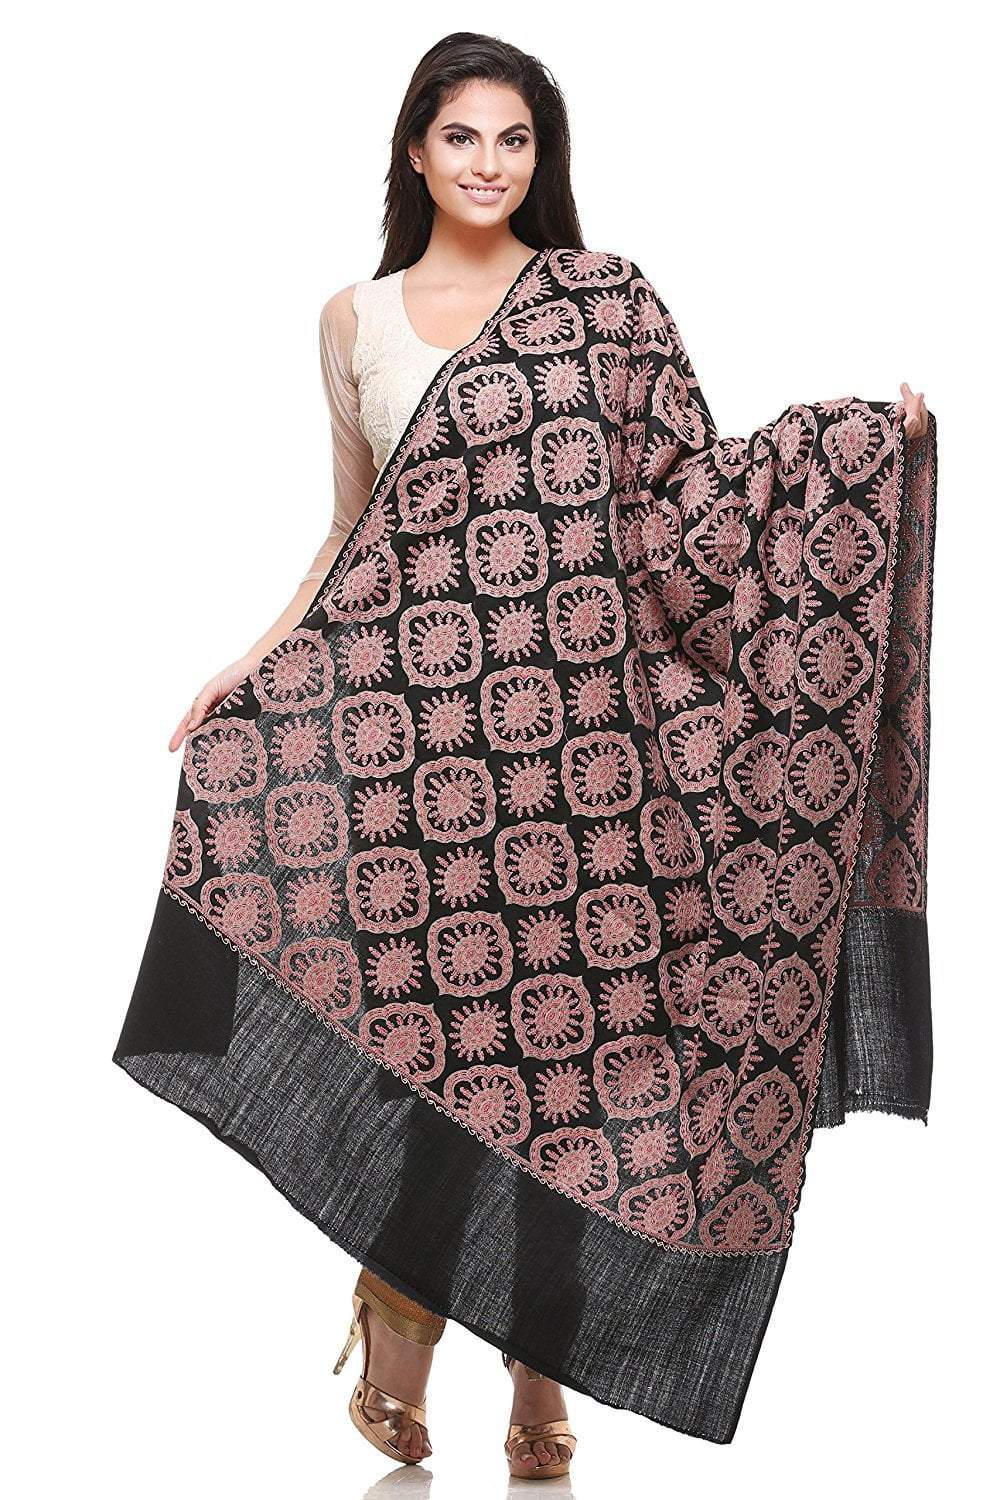 Pashtush India shawl Pashtush Women's Heavy Embroidered Shawl (Black)